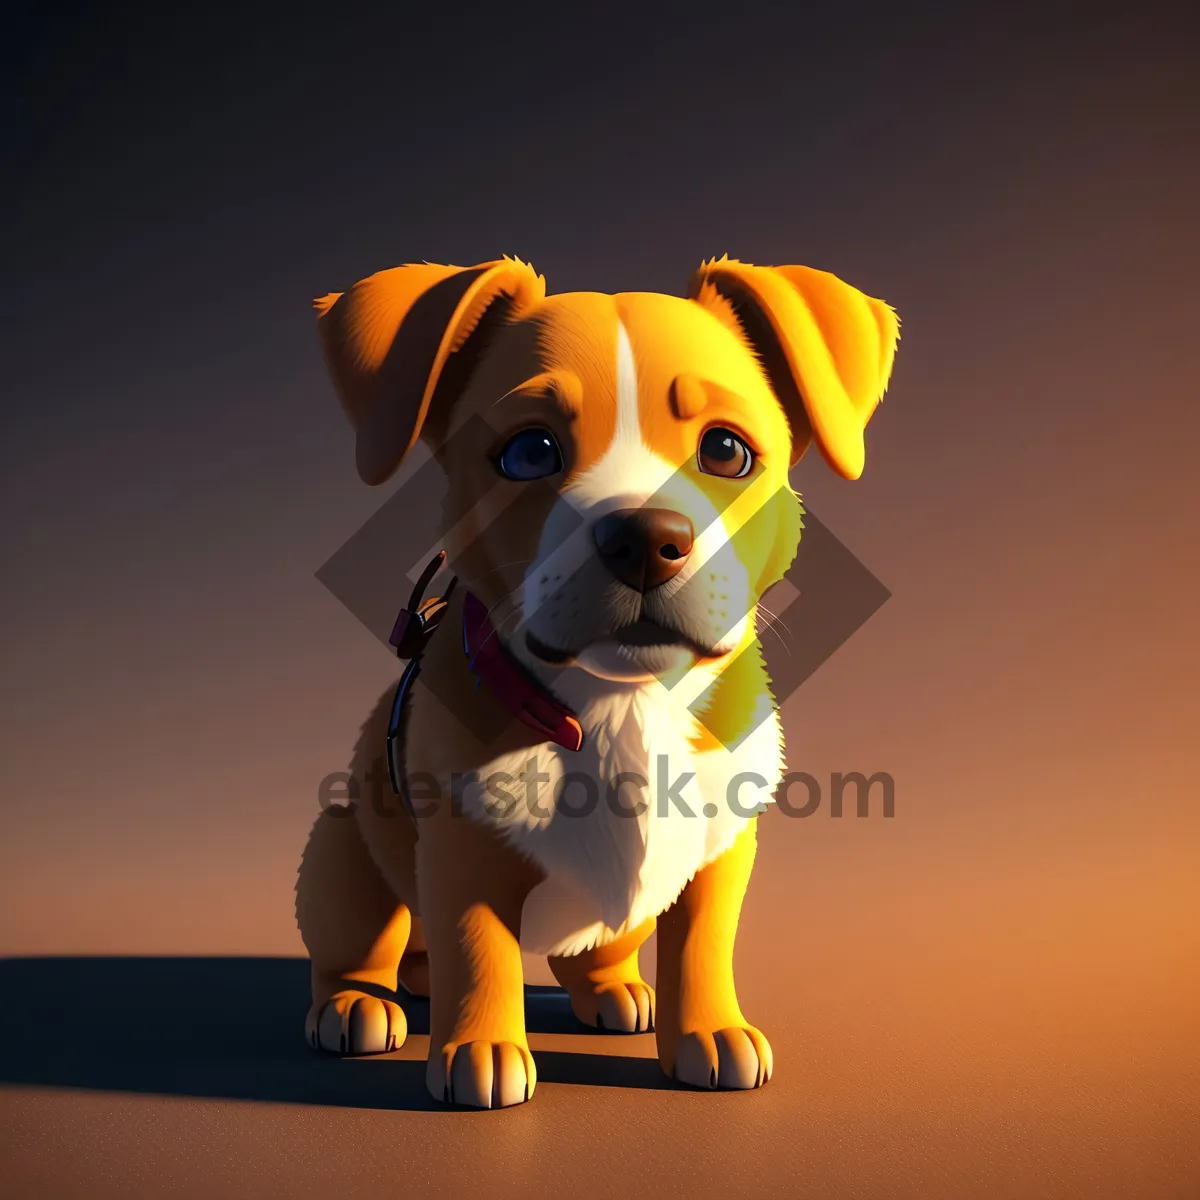 Picture of Cute Bulldog Puppy Sitting for a Studio Portrait